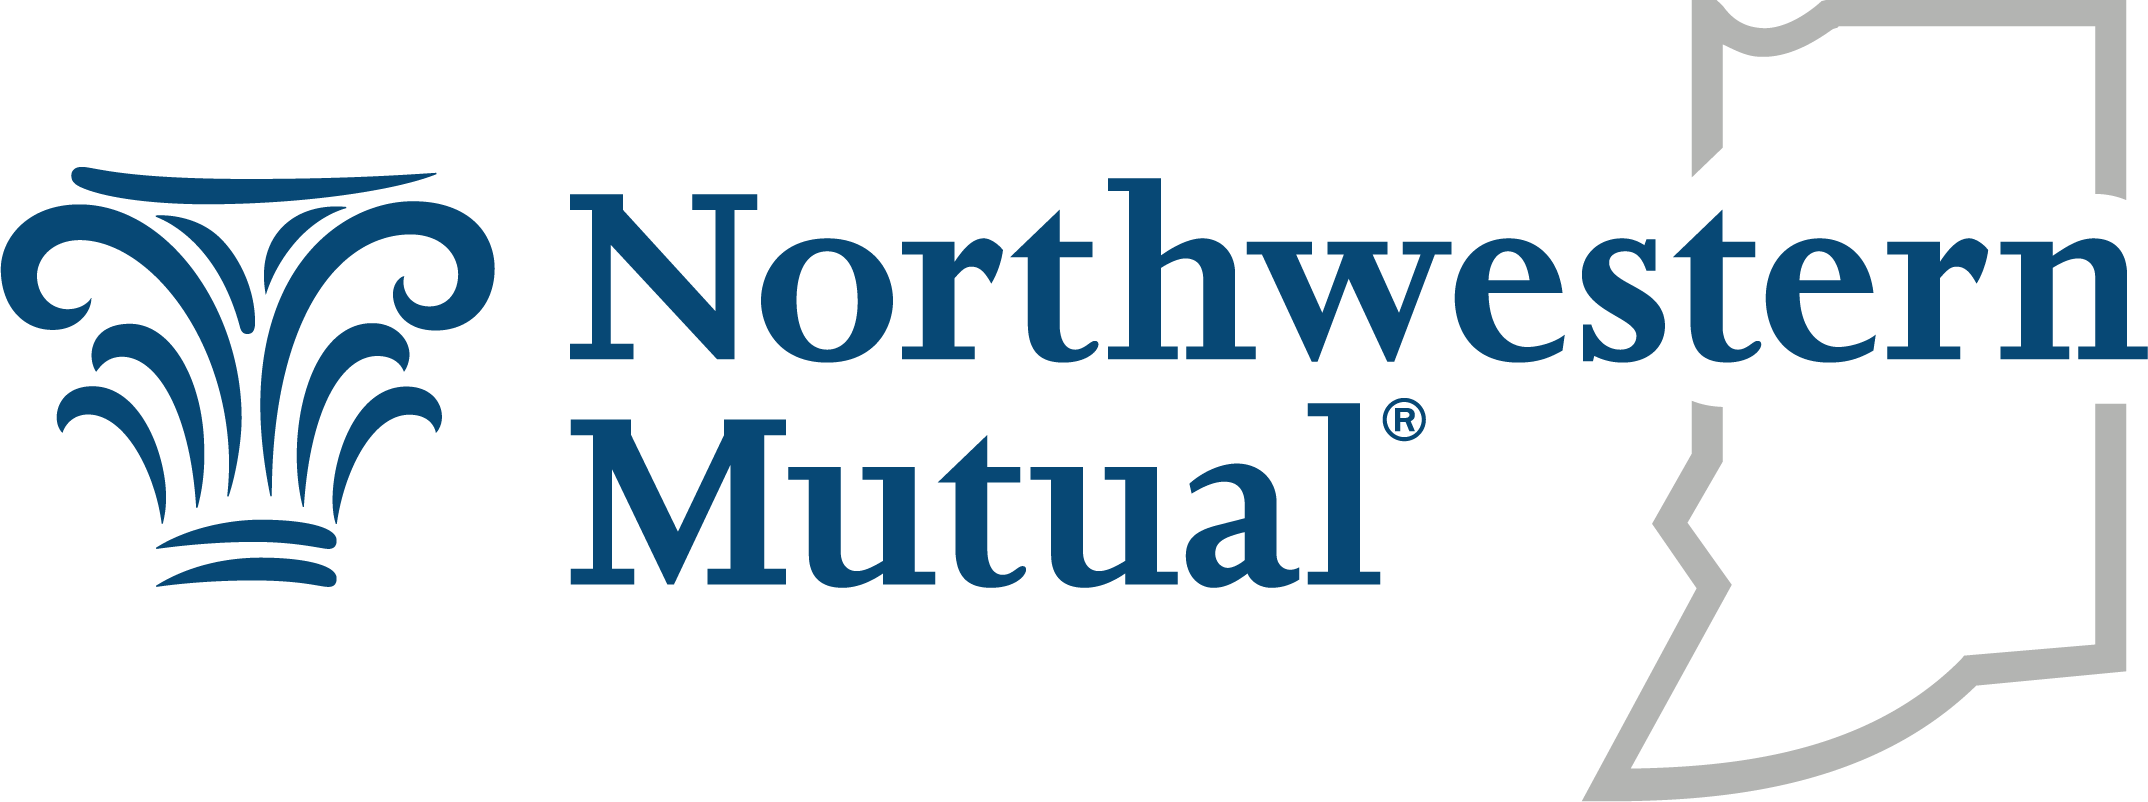 Northwestern Mutual - Indiana Company Logo